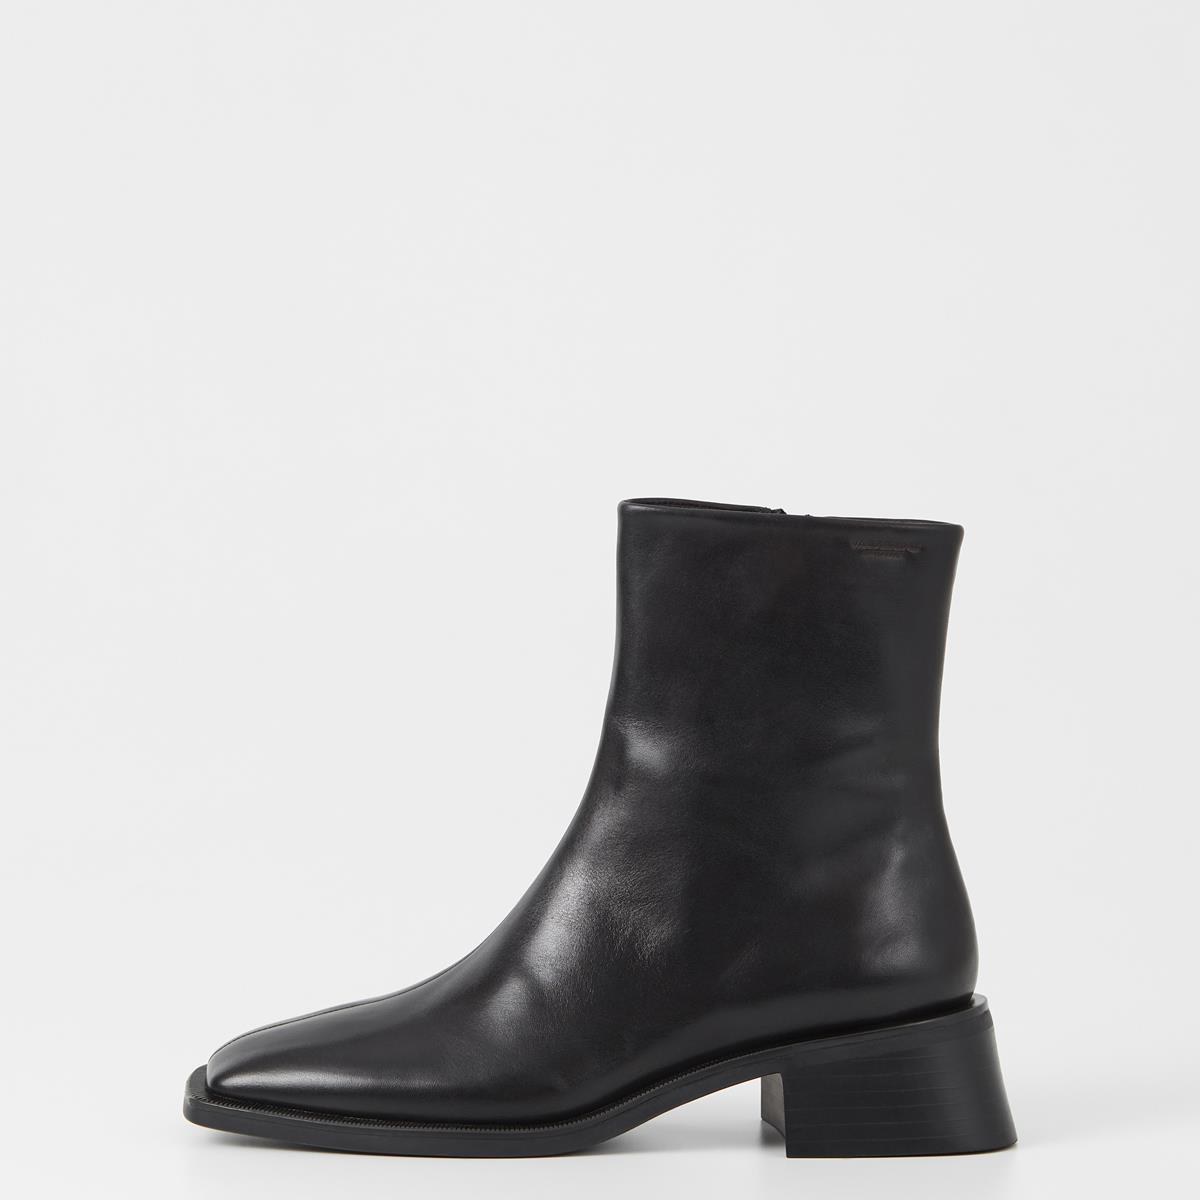 Blanca - Black Boots Woman | Vagabond